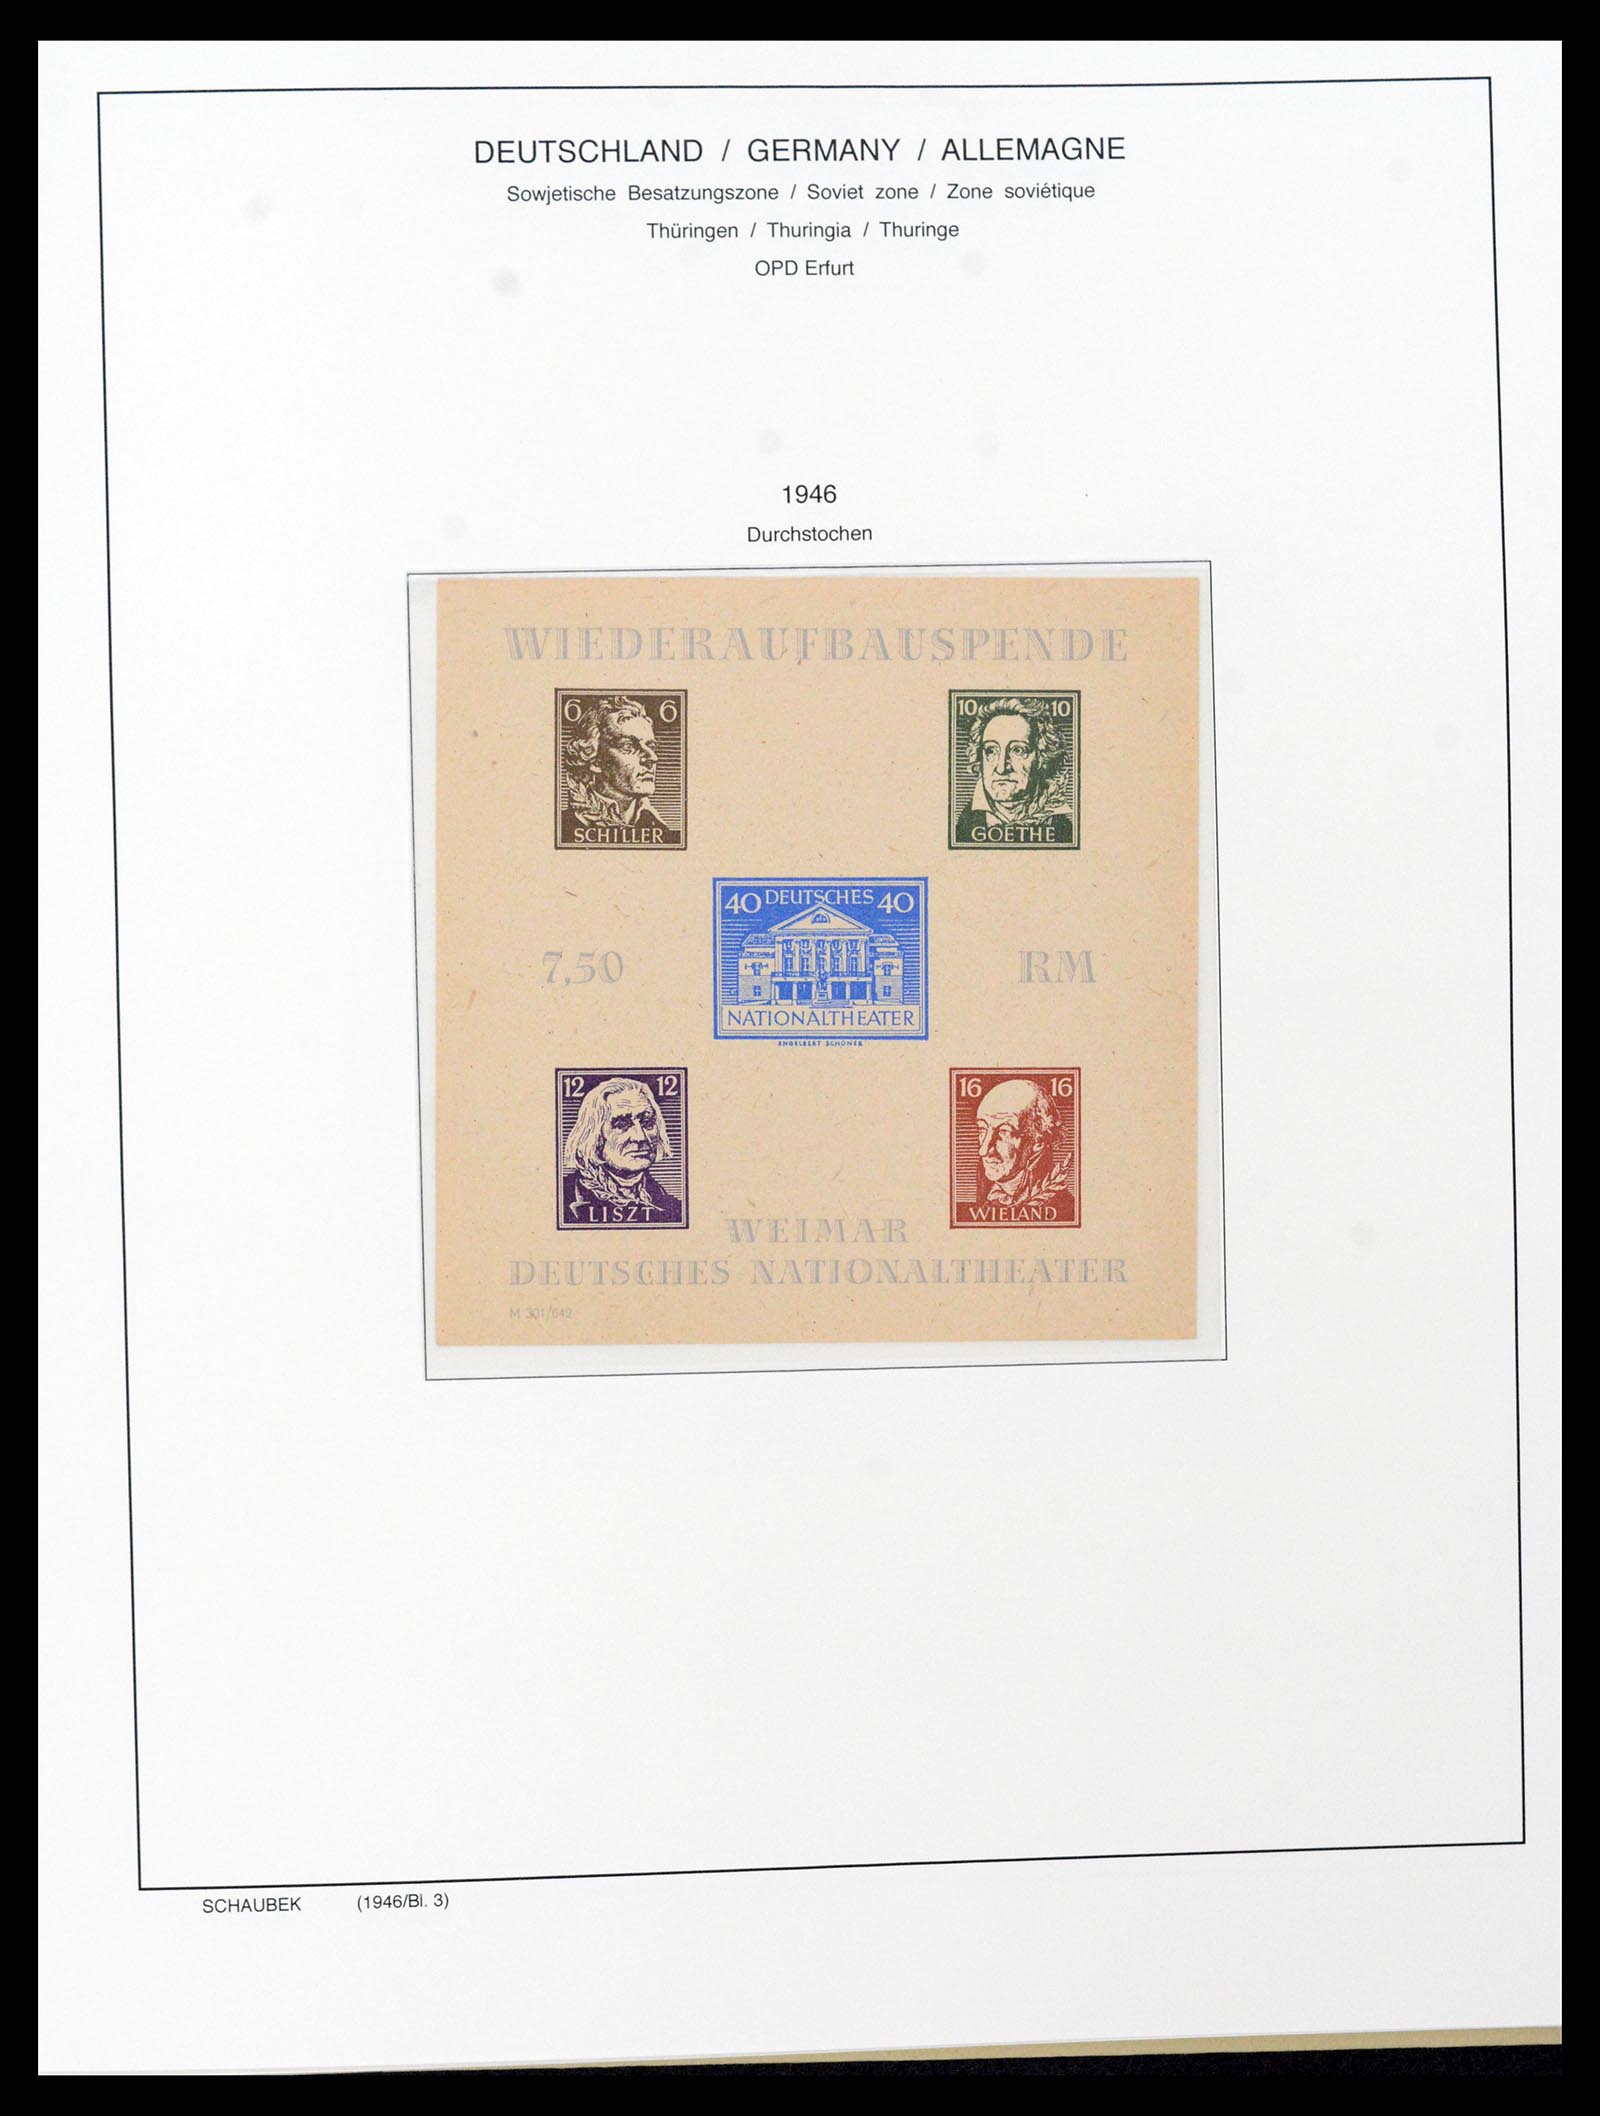 37645 037 - Stamp collection 37645 German Zones 1945-1949.